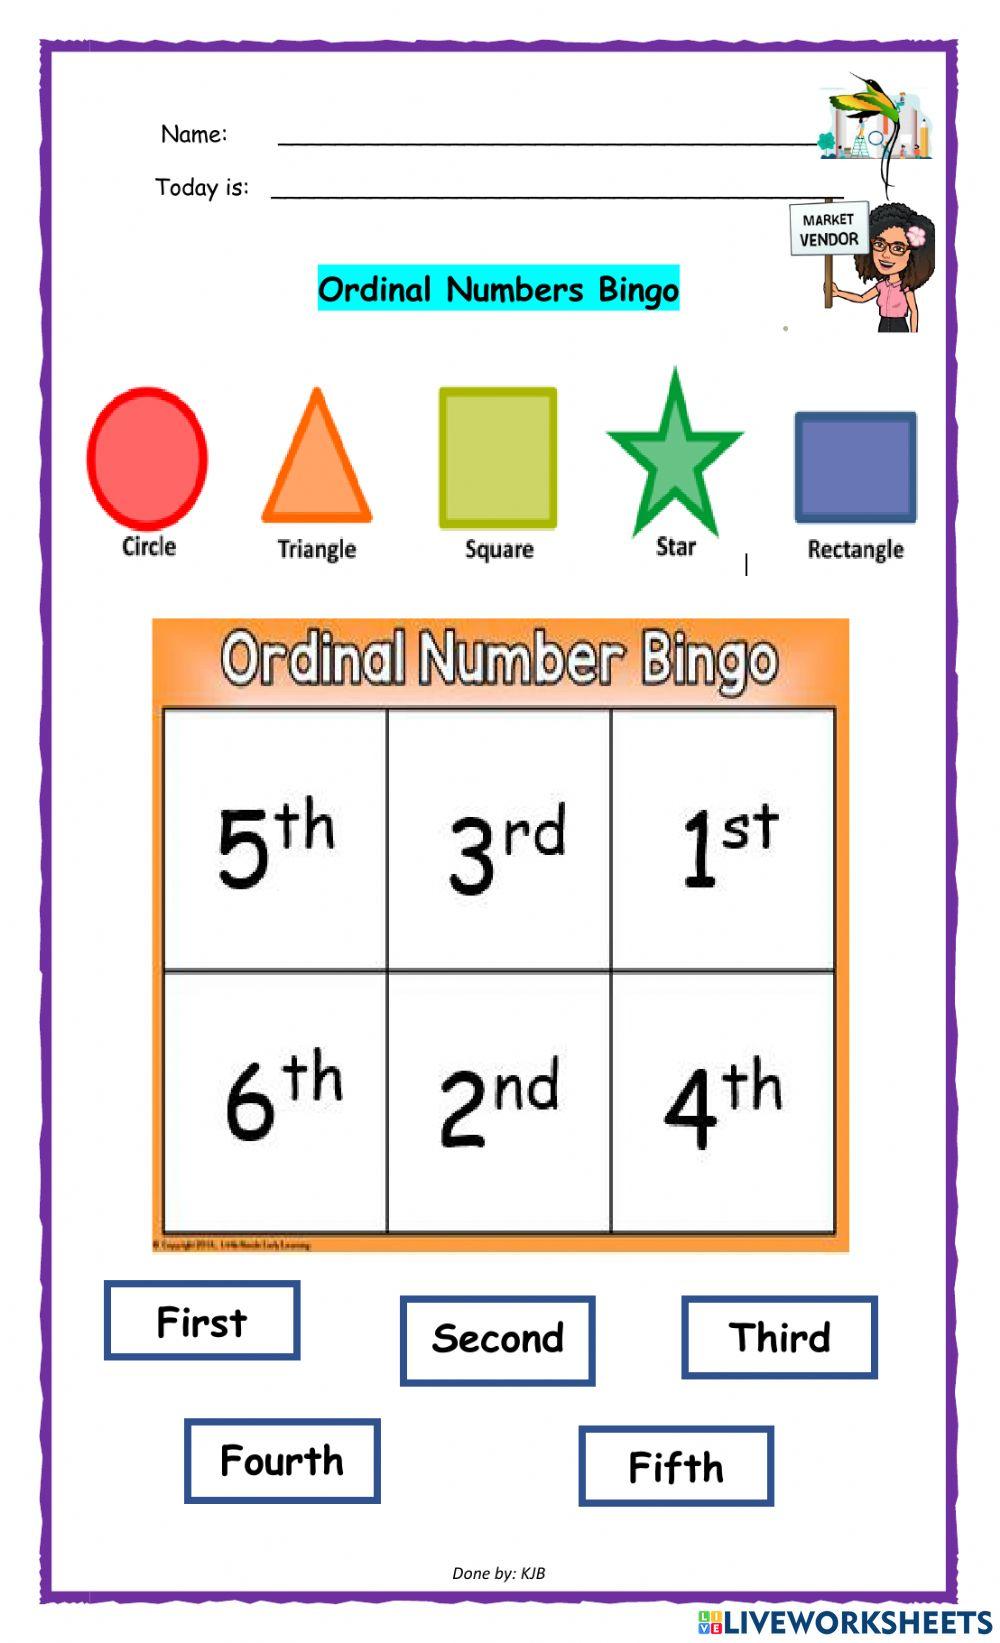 Ordinal Number Bingo